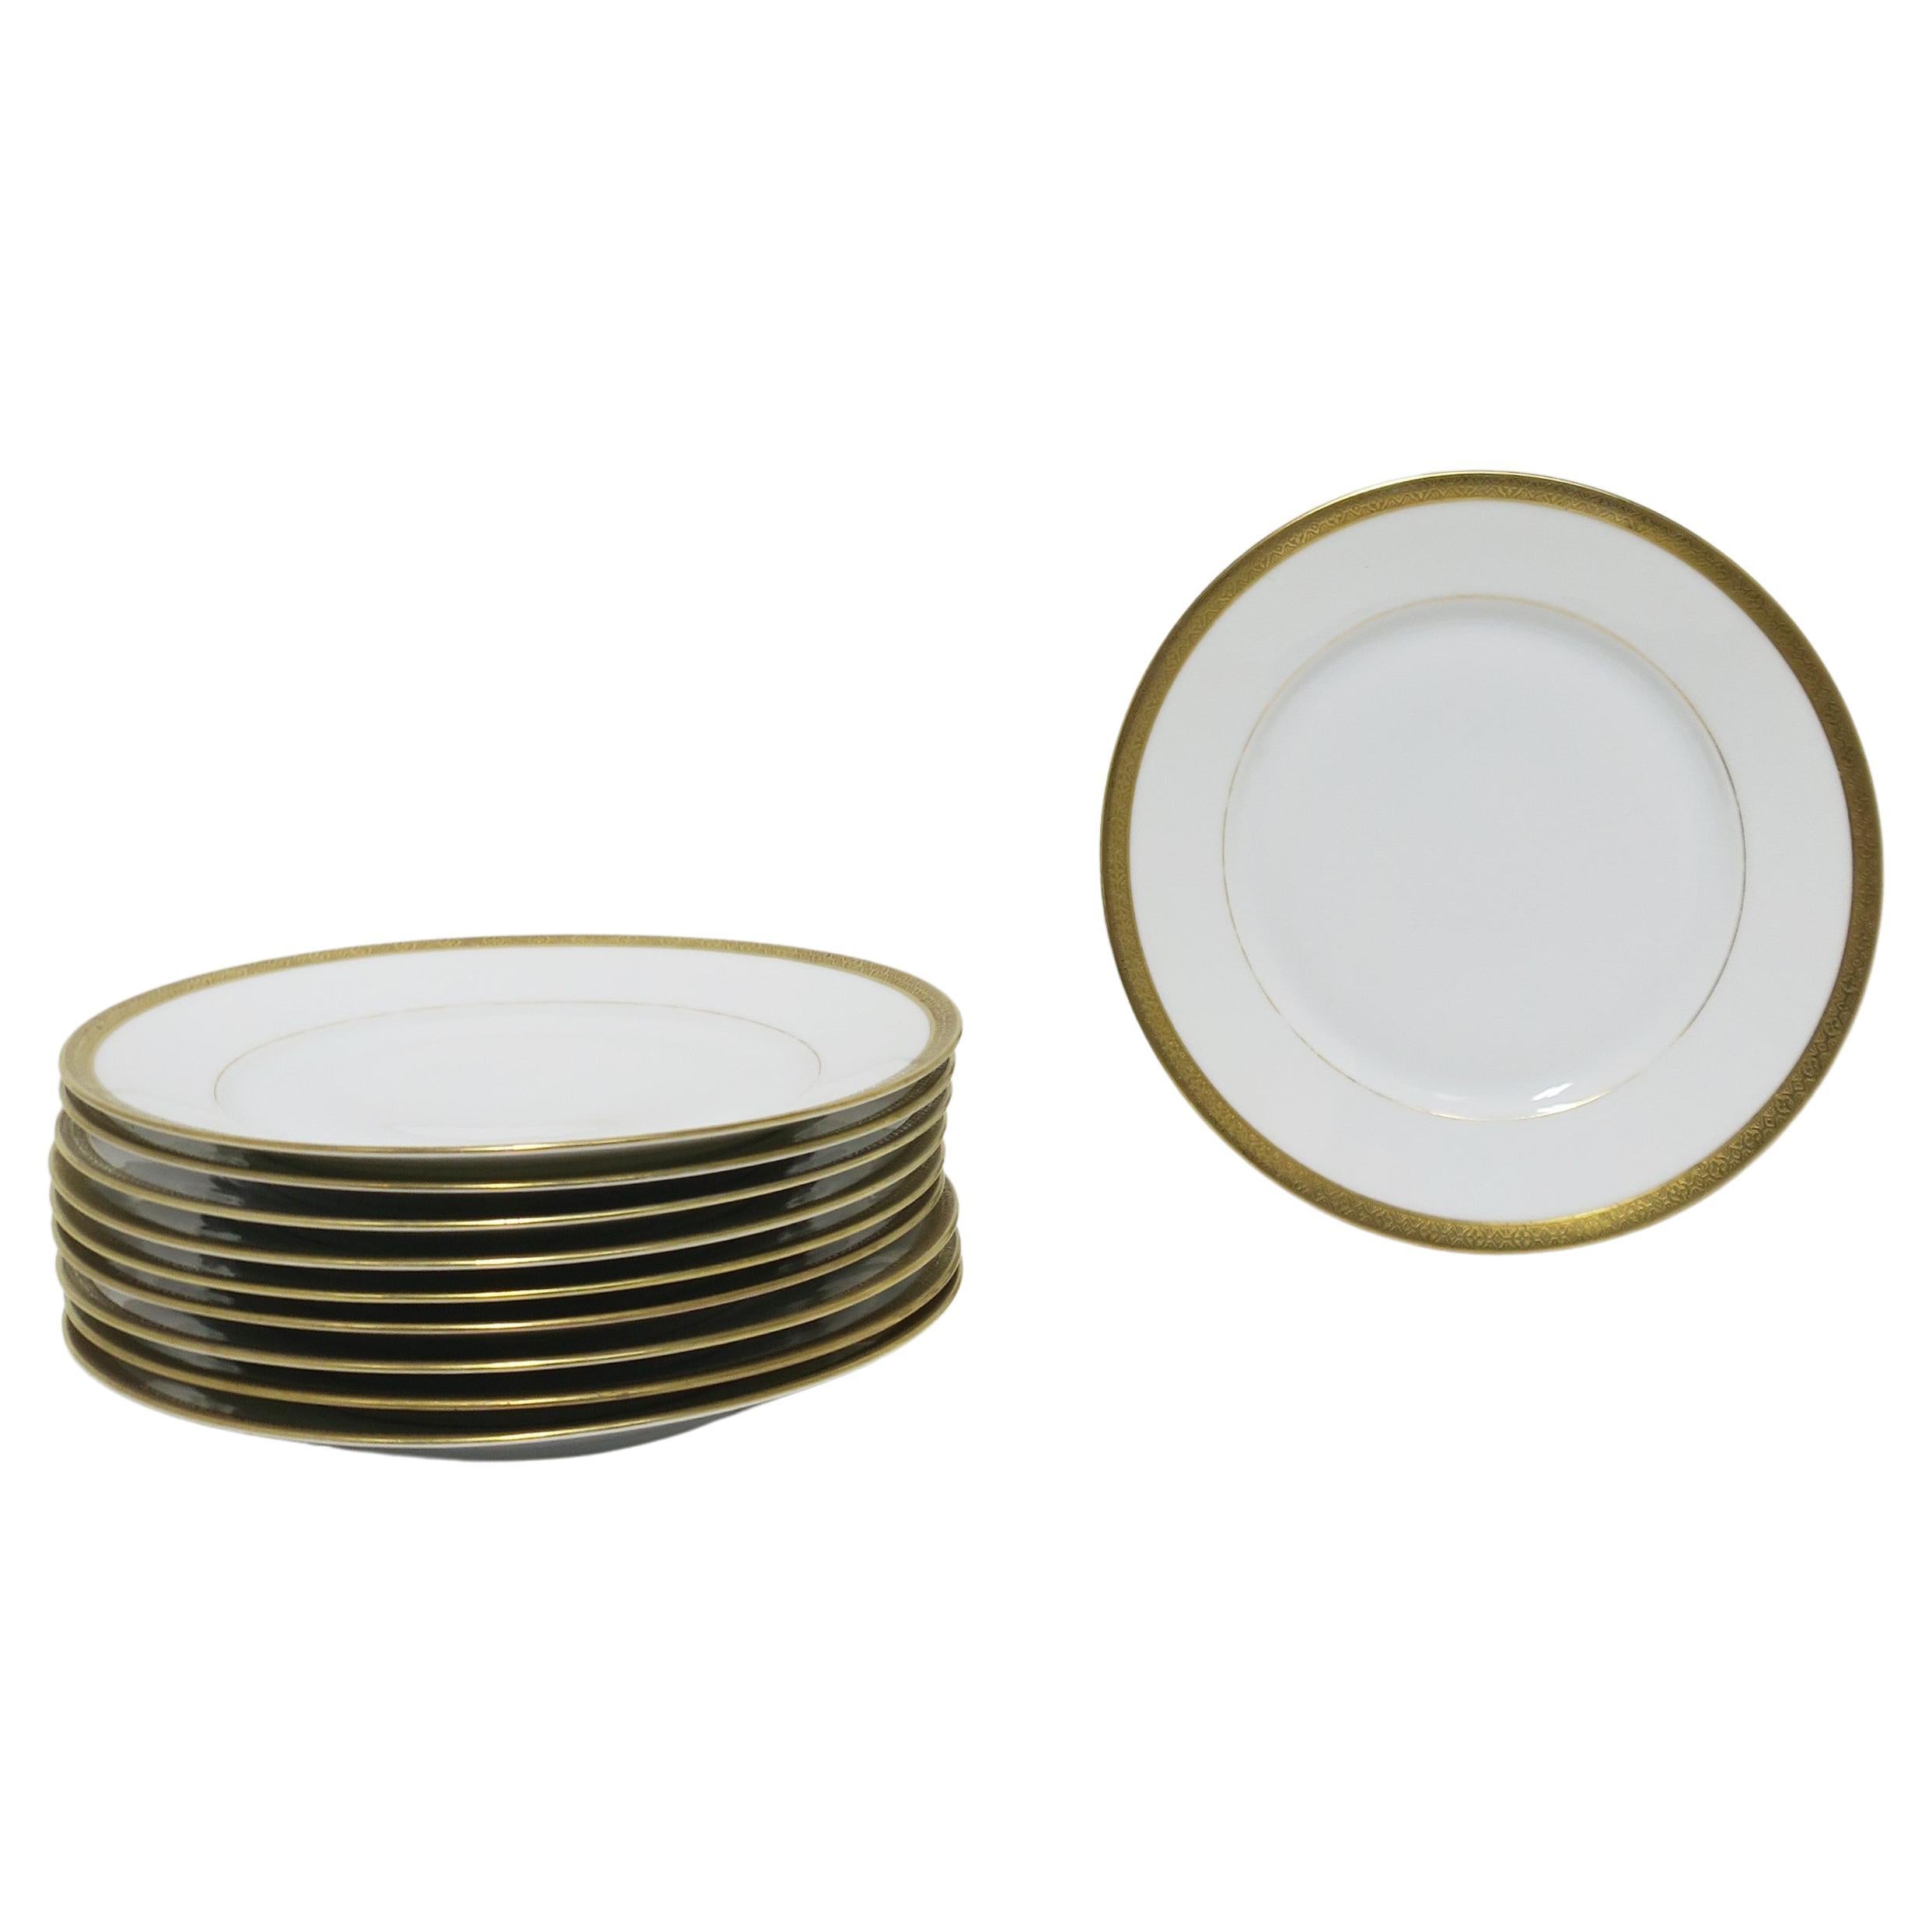 Austrian White Porcelain Plates with Gold Edge, Set of 10